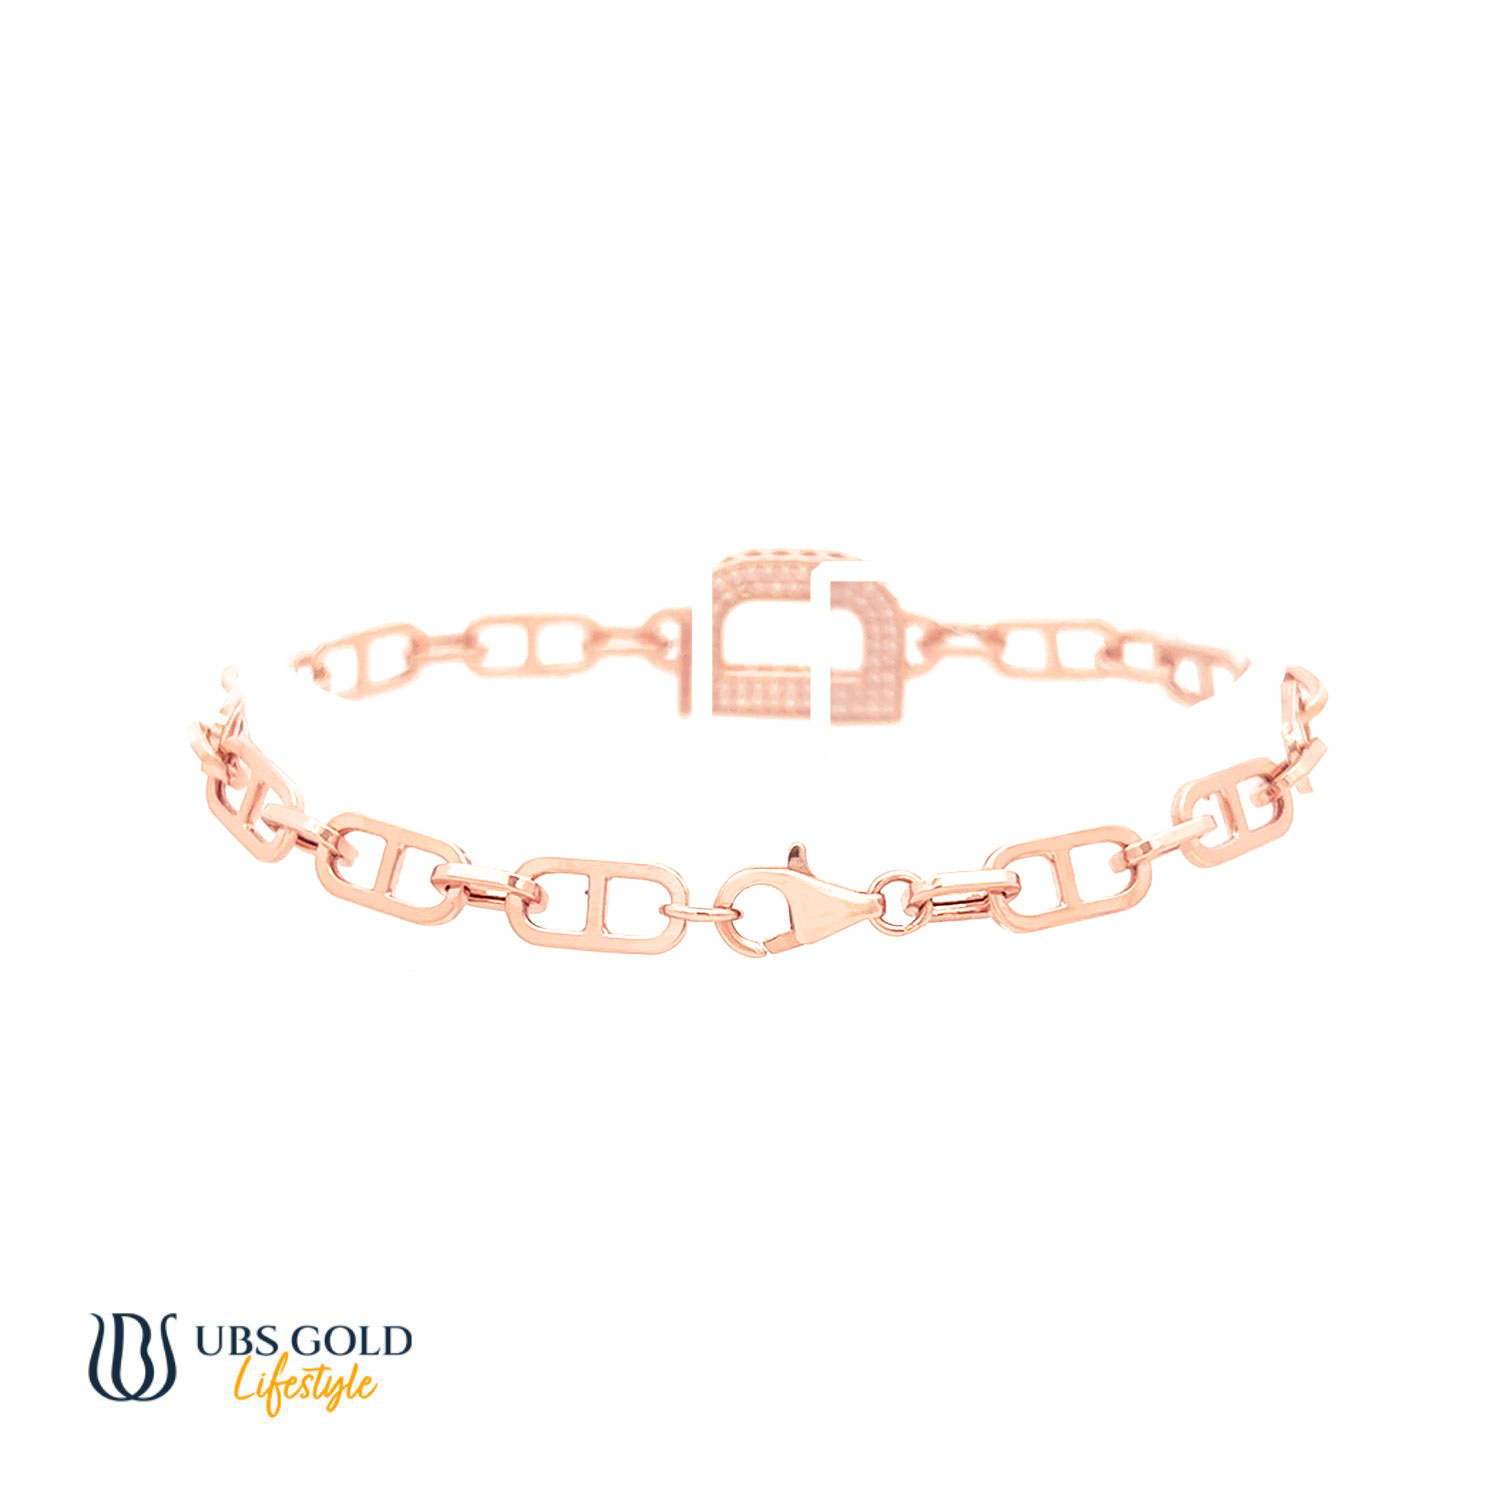 UBS Gold Gelang Emas Alpha Chain D - Hdg0161 - 17K